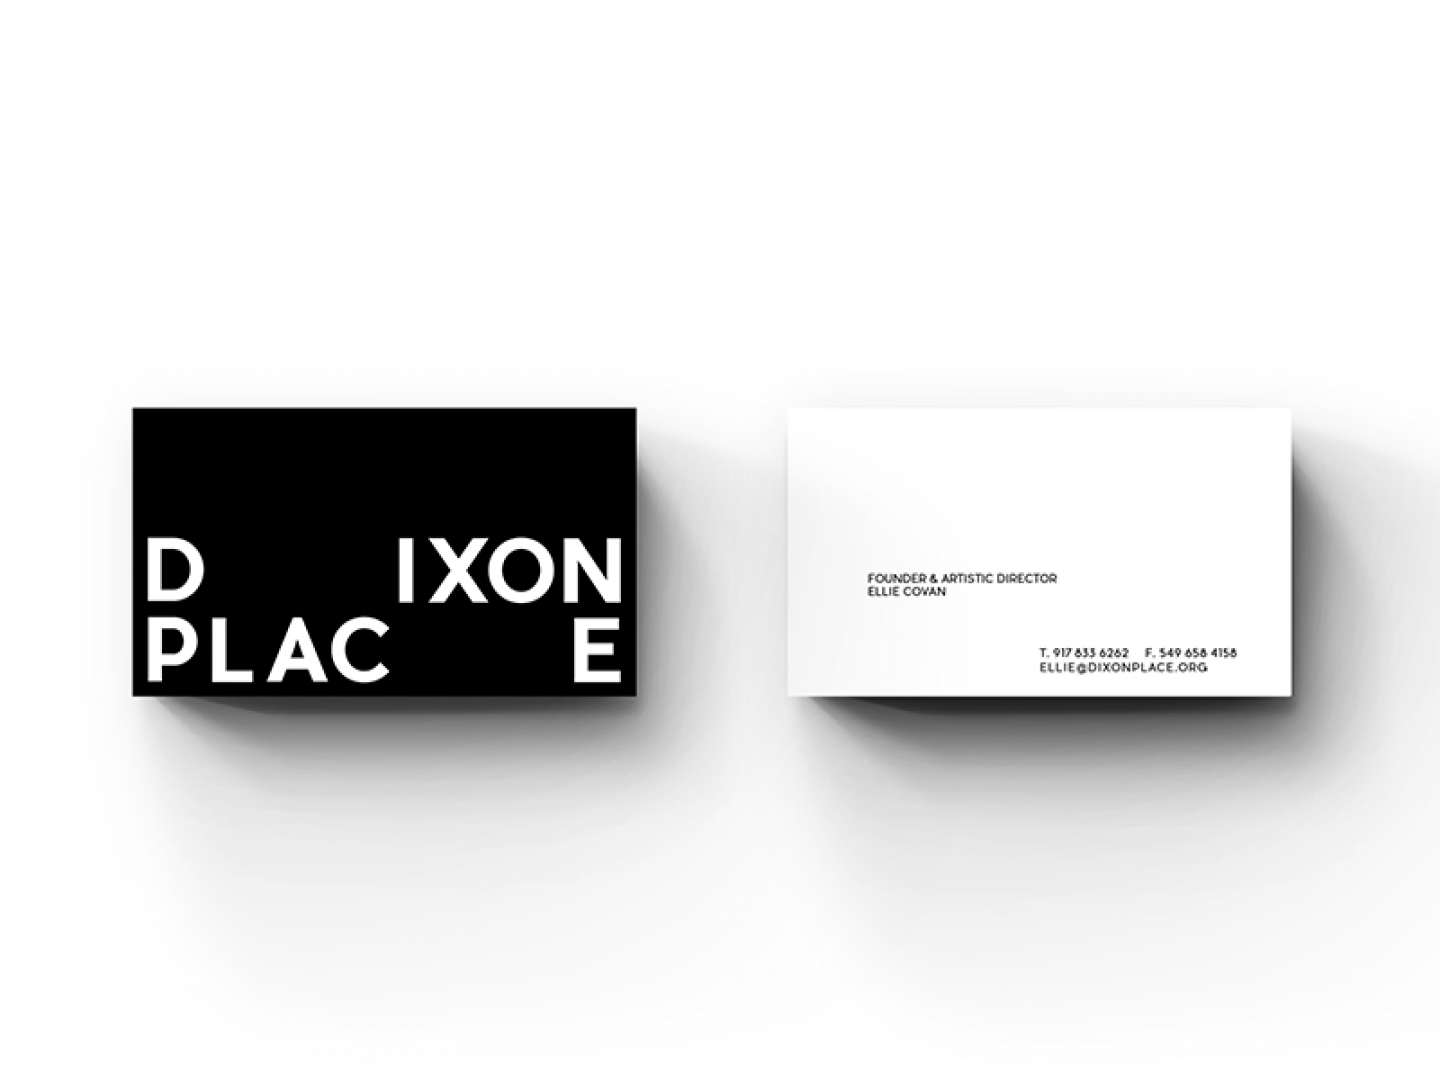 Dixon Place by Hye Ri Hyun SVA Design